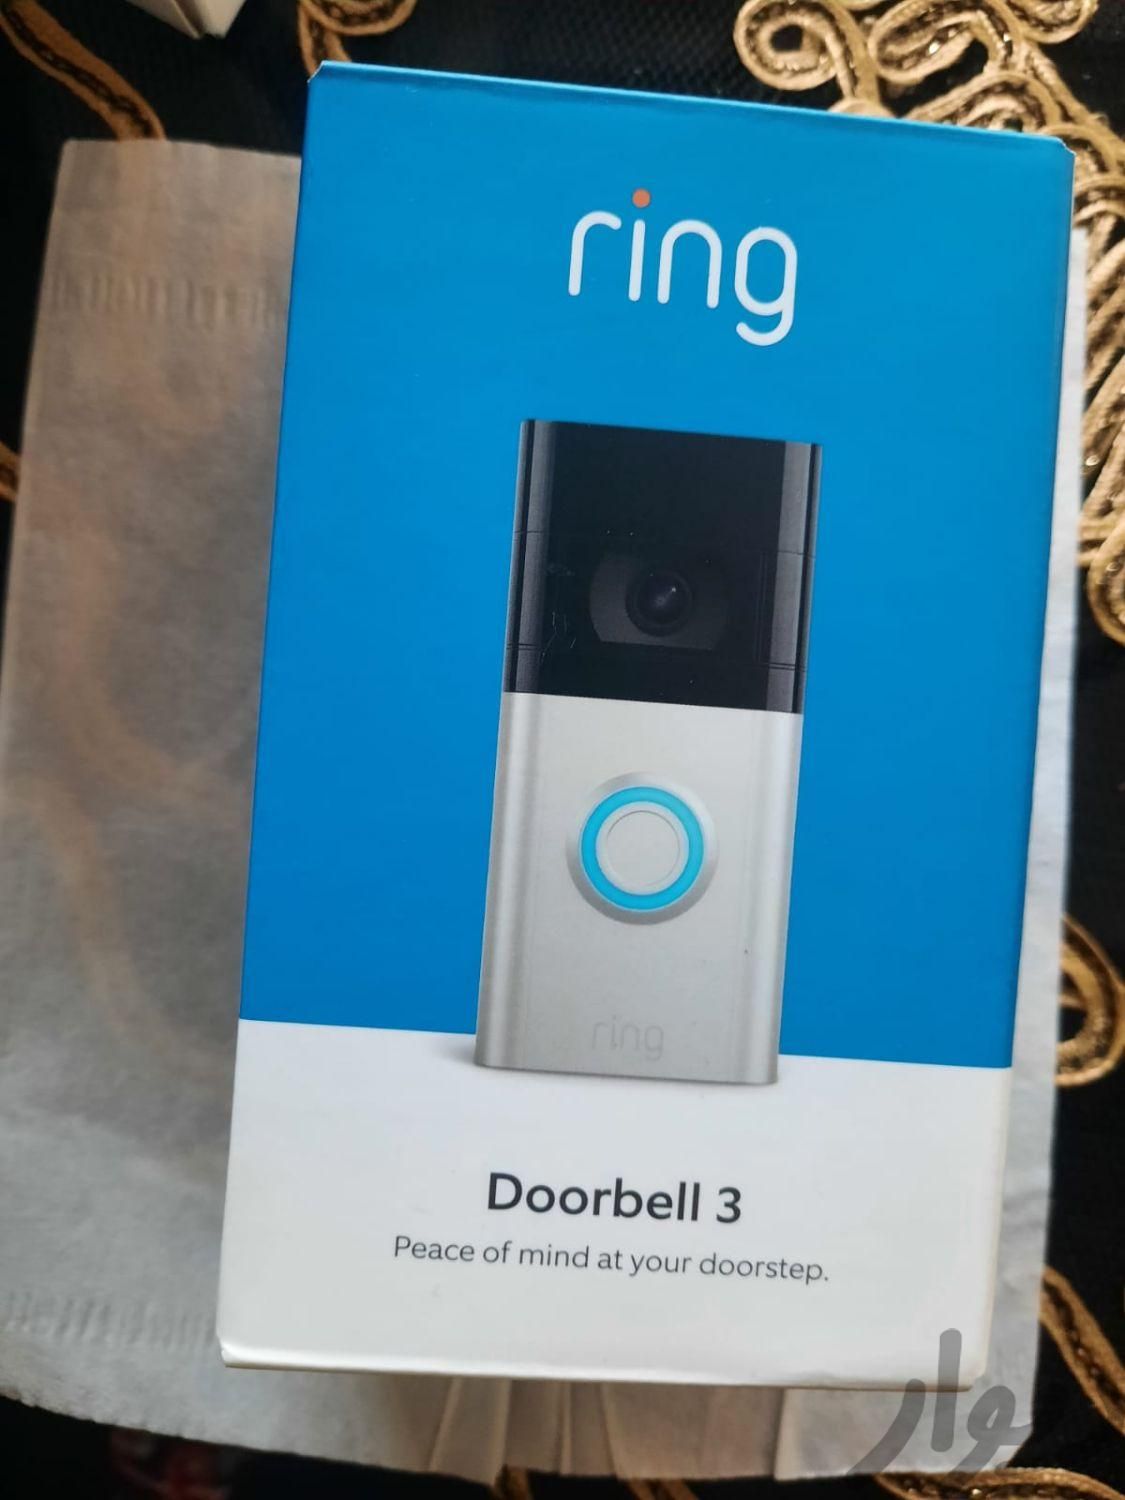 زنگ در هوشمند Ring Video Doorbell 3|مصالح و تجهیزات ساختمان|بابل, |دیوار